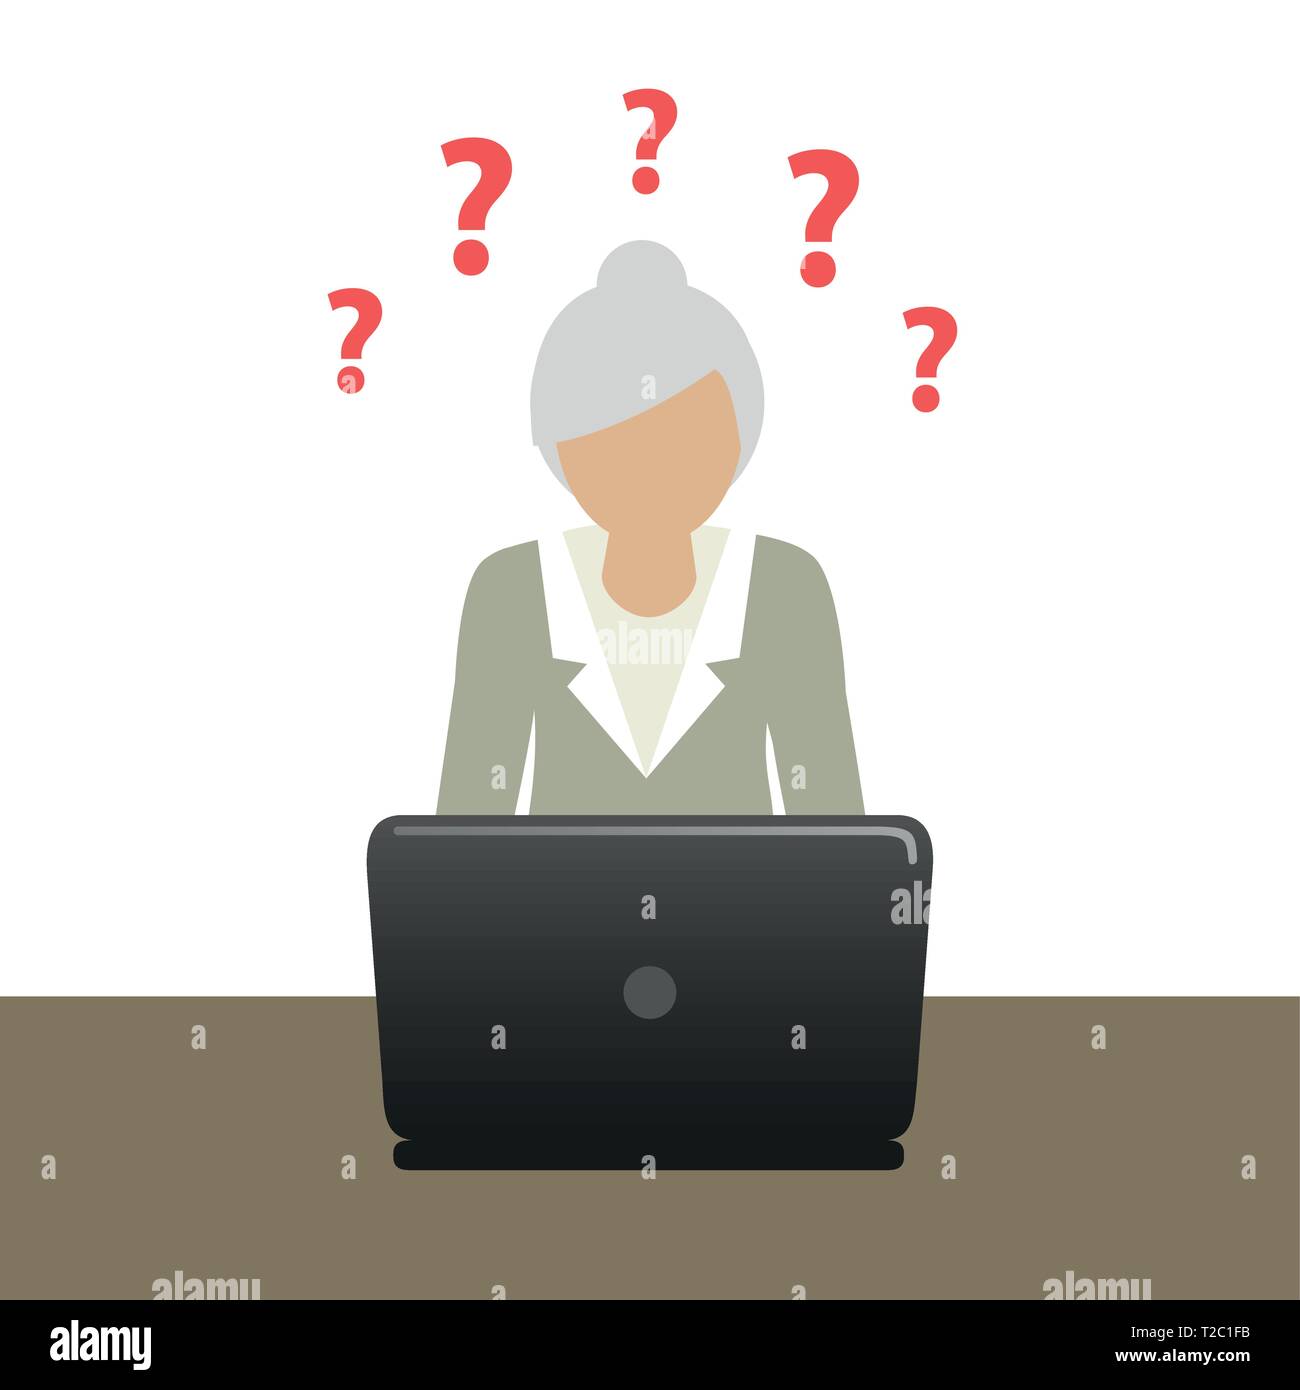 Oma auf dem Laptop hat viele Fragen Vektor-illustration EPS 10. Stock Vektor